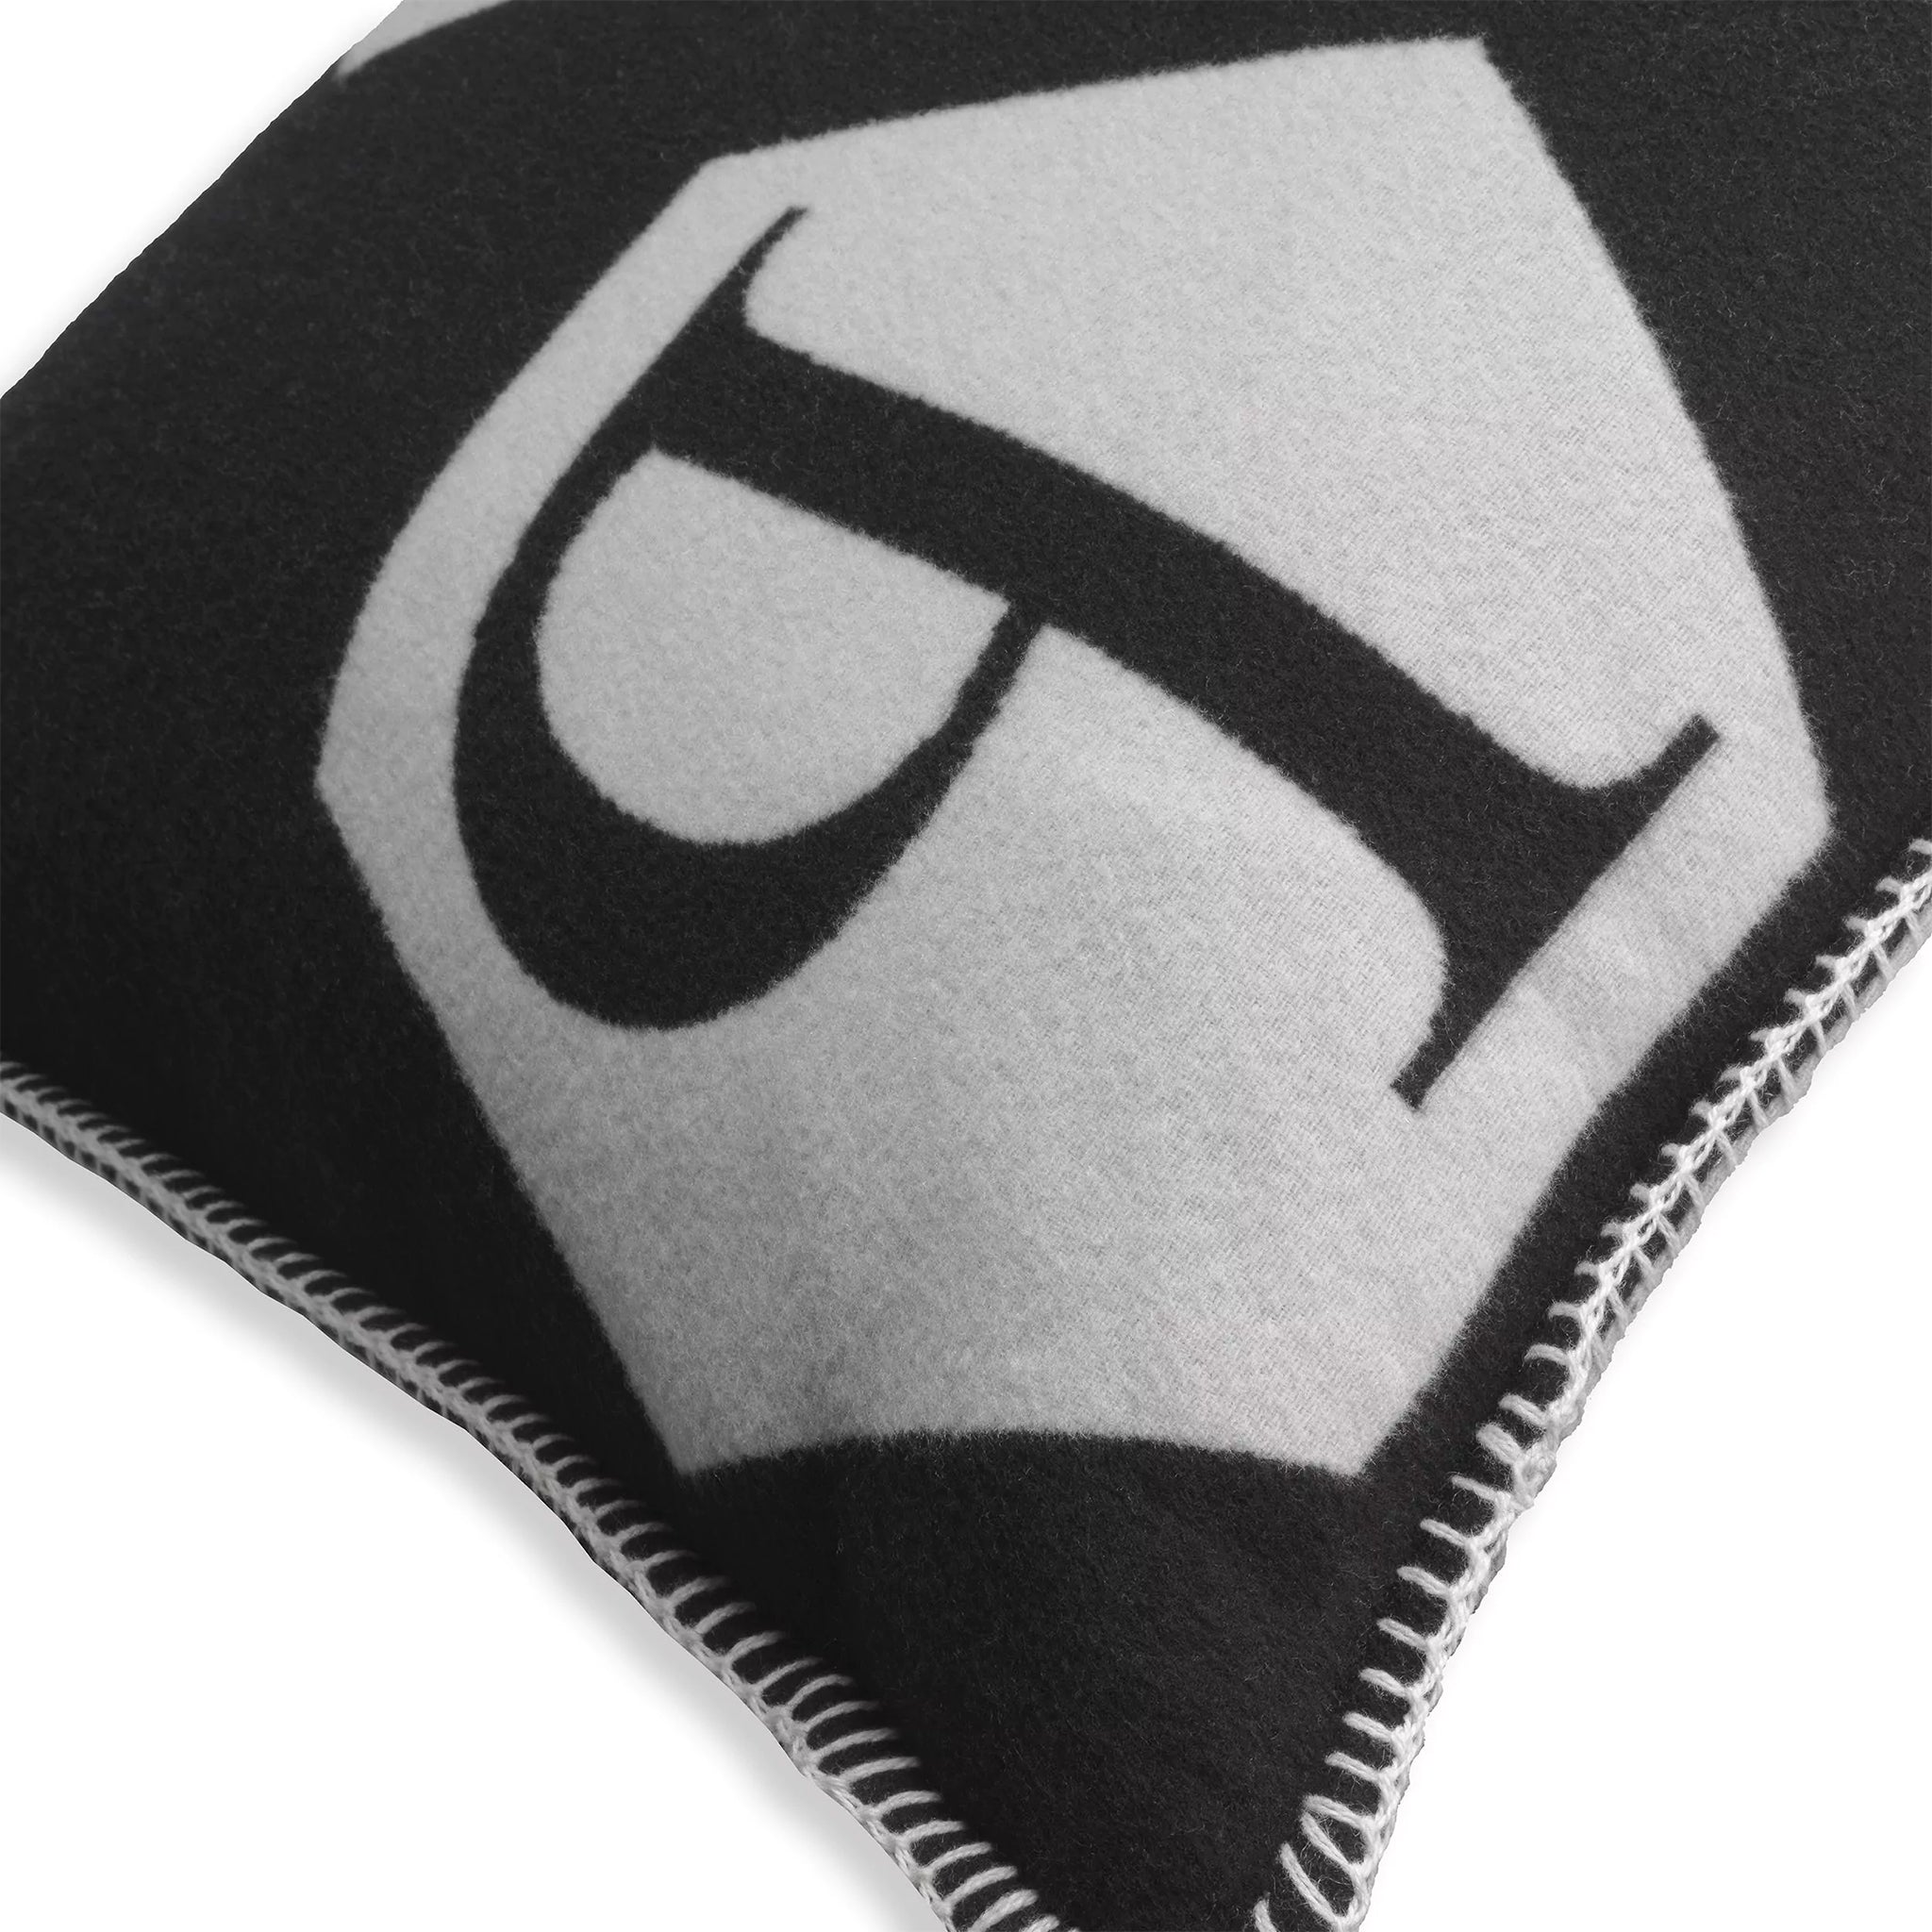 eichholtz cashmere black cushion pp decorative pillows & cushions 